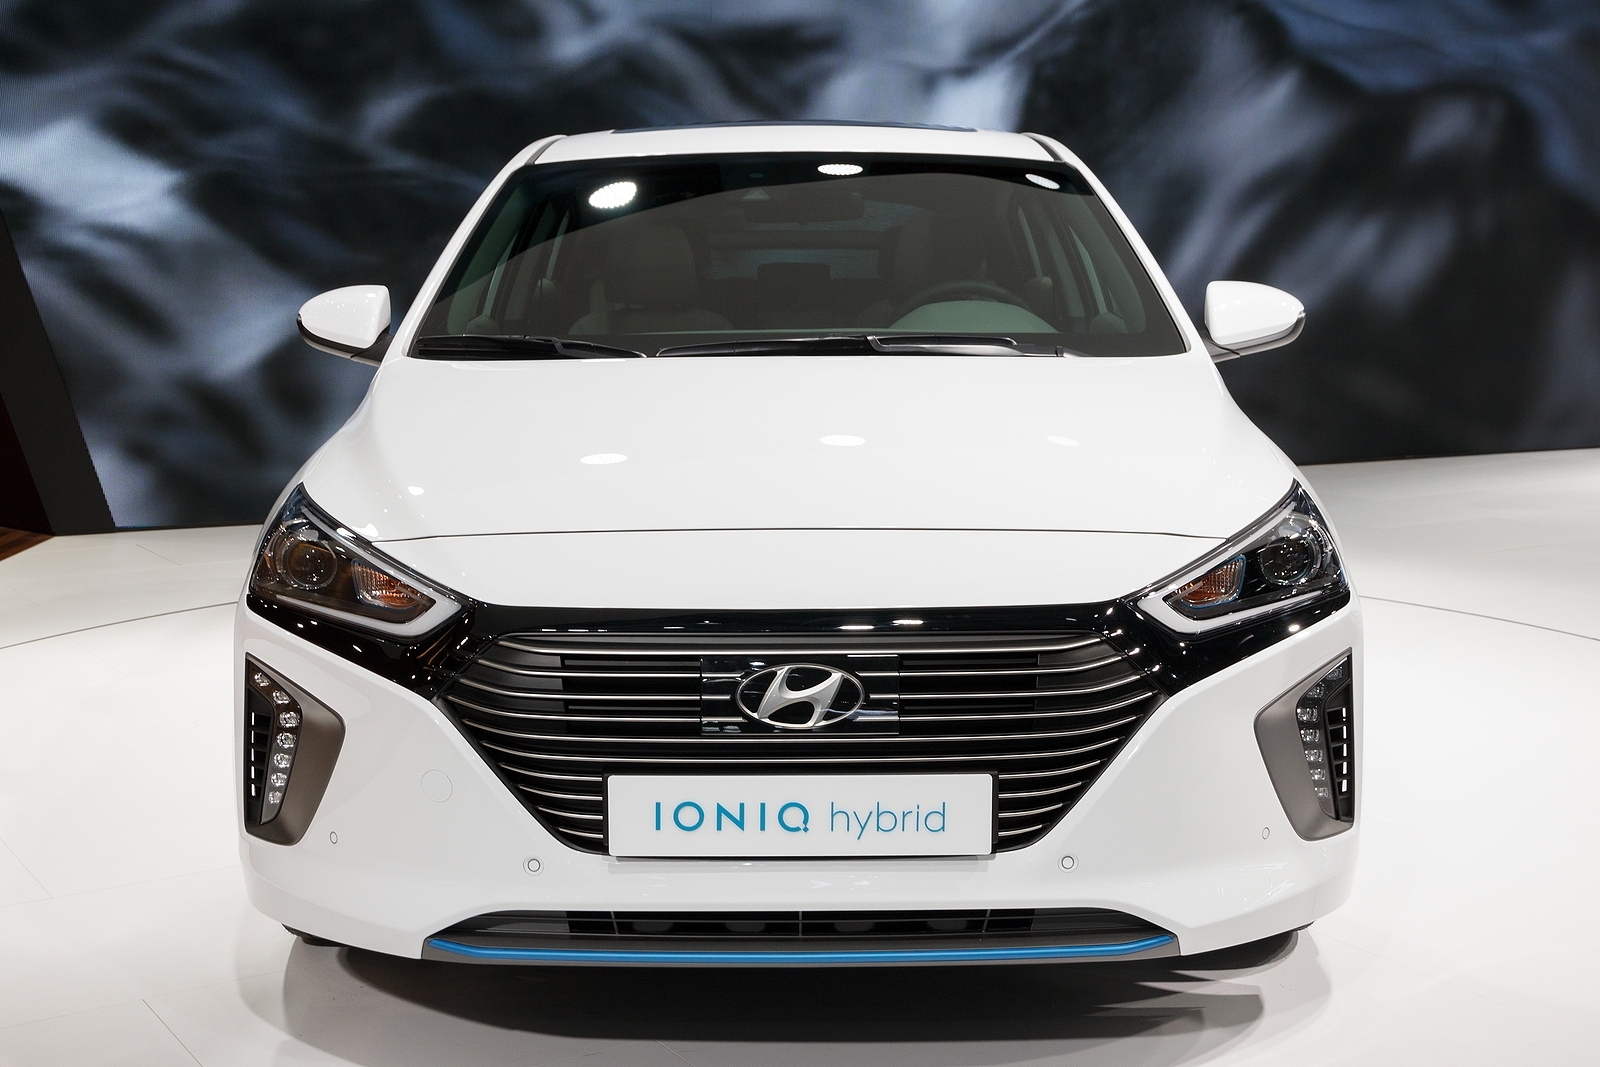 Hyundai Recalling Certain Ioniq EVs for Unintended Acceleration